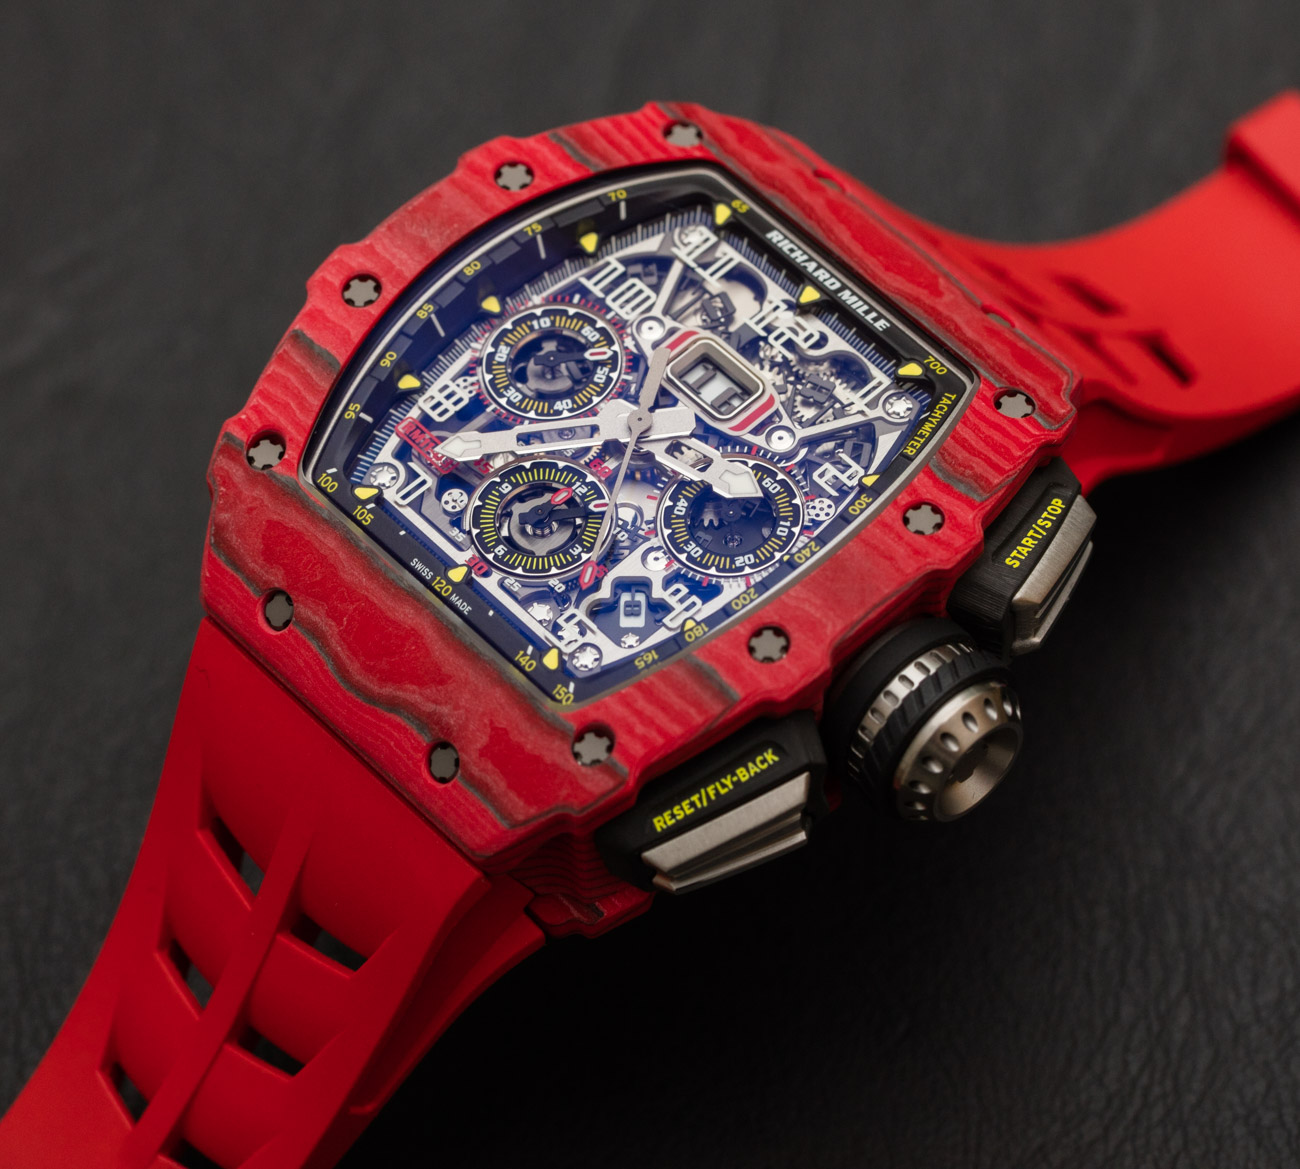 Richard-Mille-RM-11-03-red-FQ-TPT-watch-17.jpg